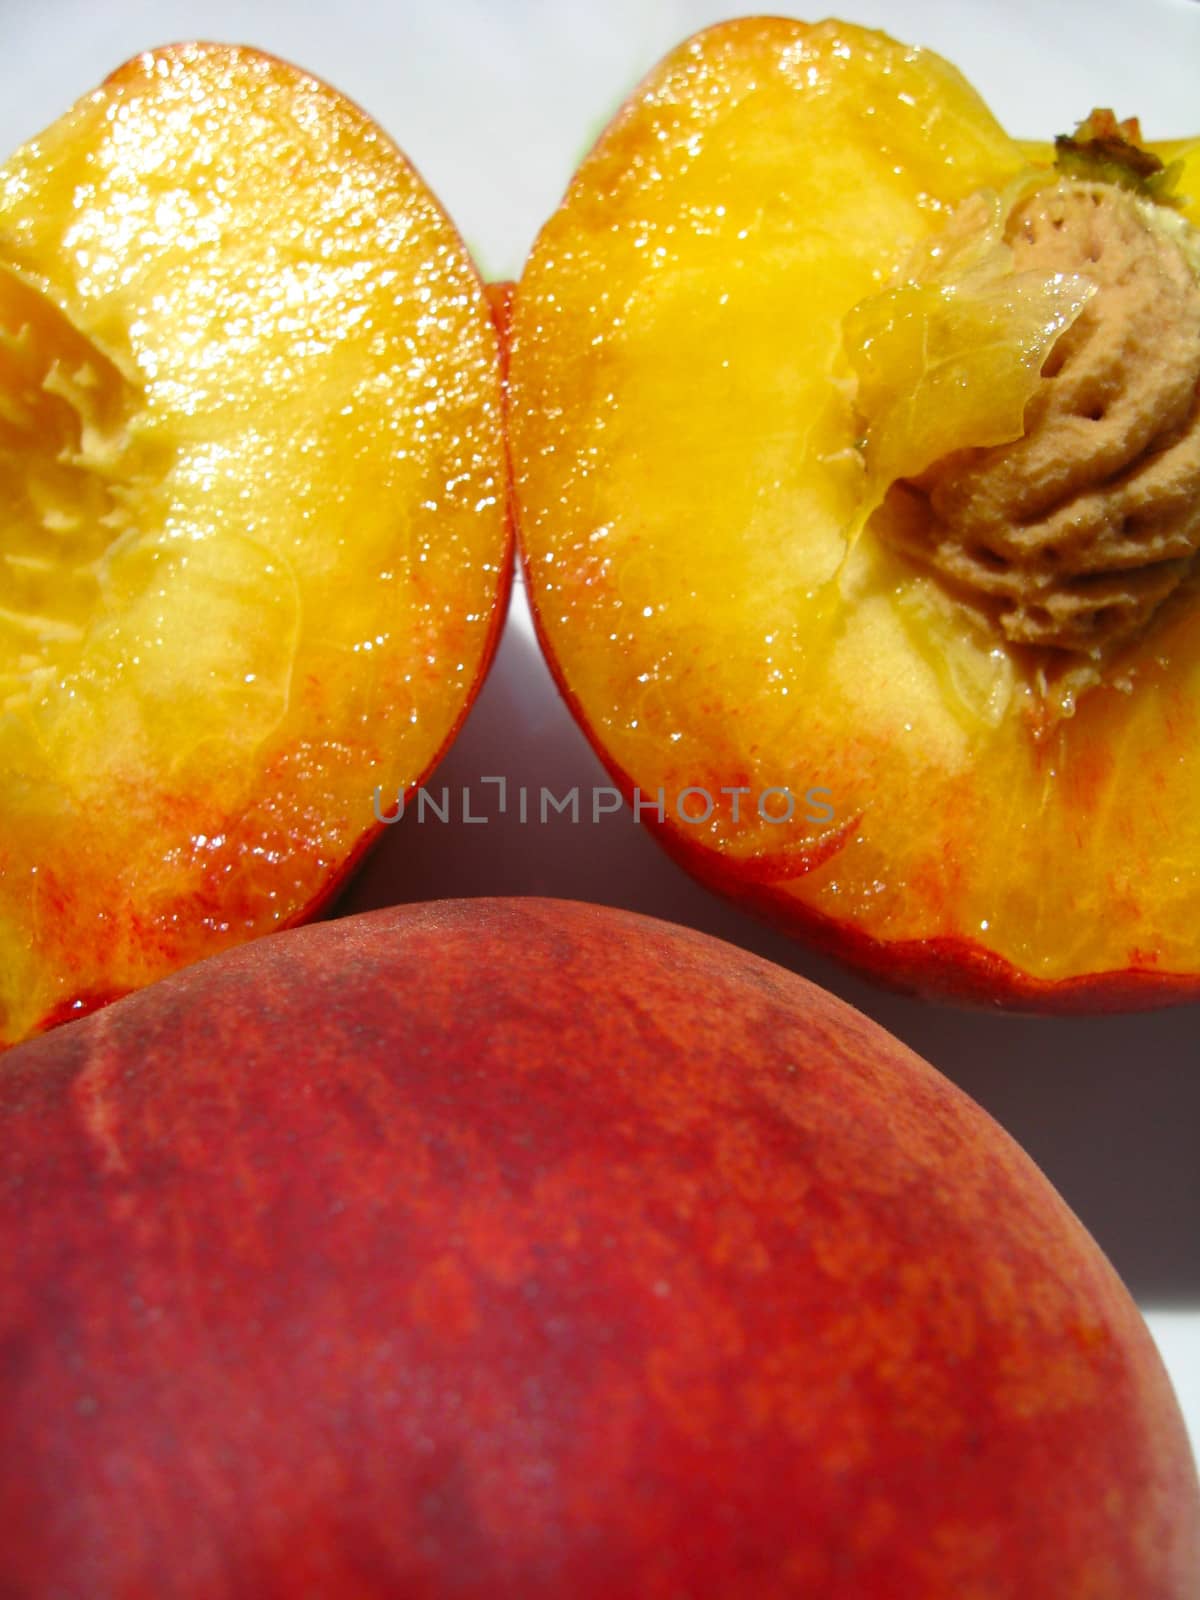 fruit of cut ripe peach by alexmak